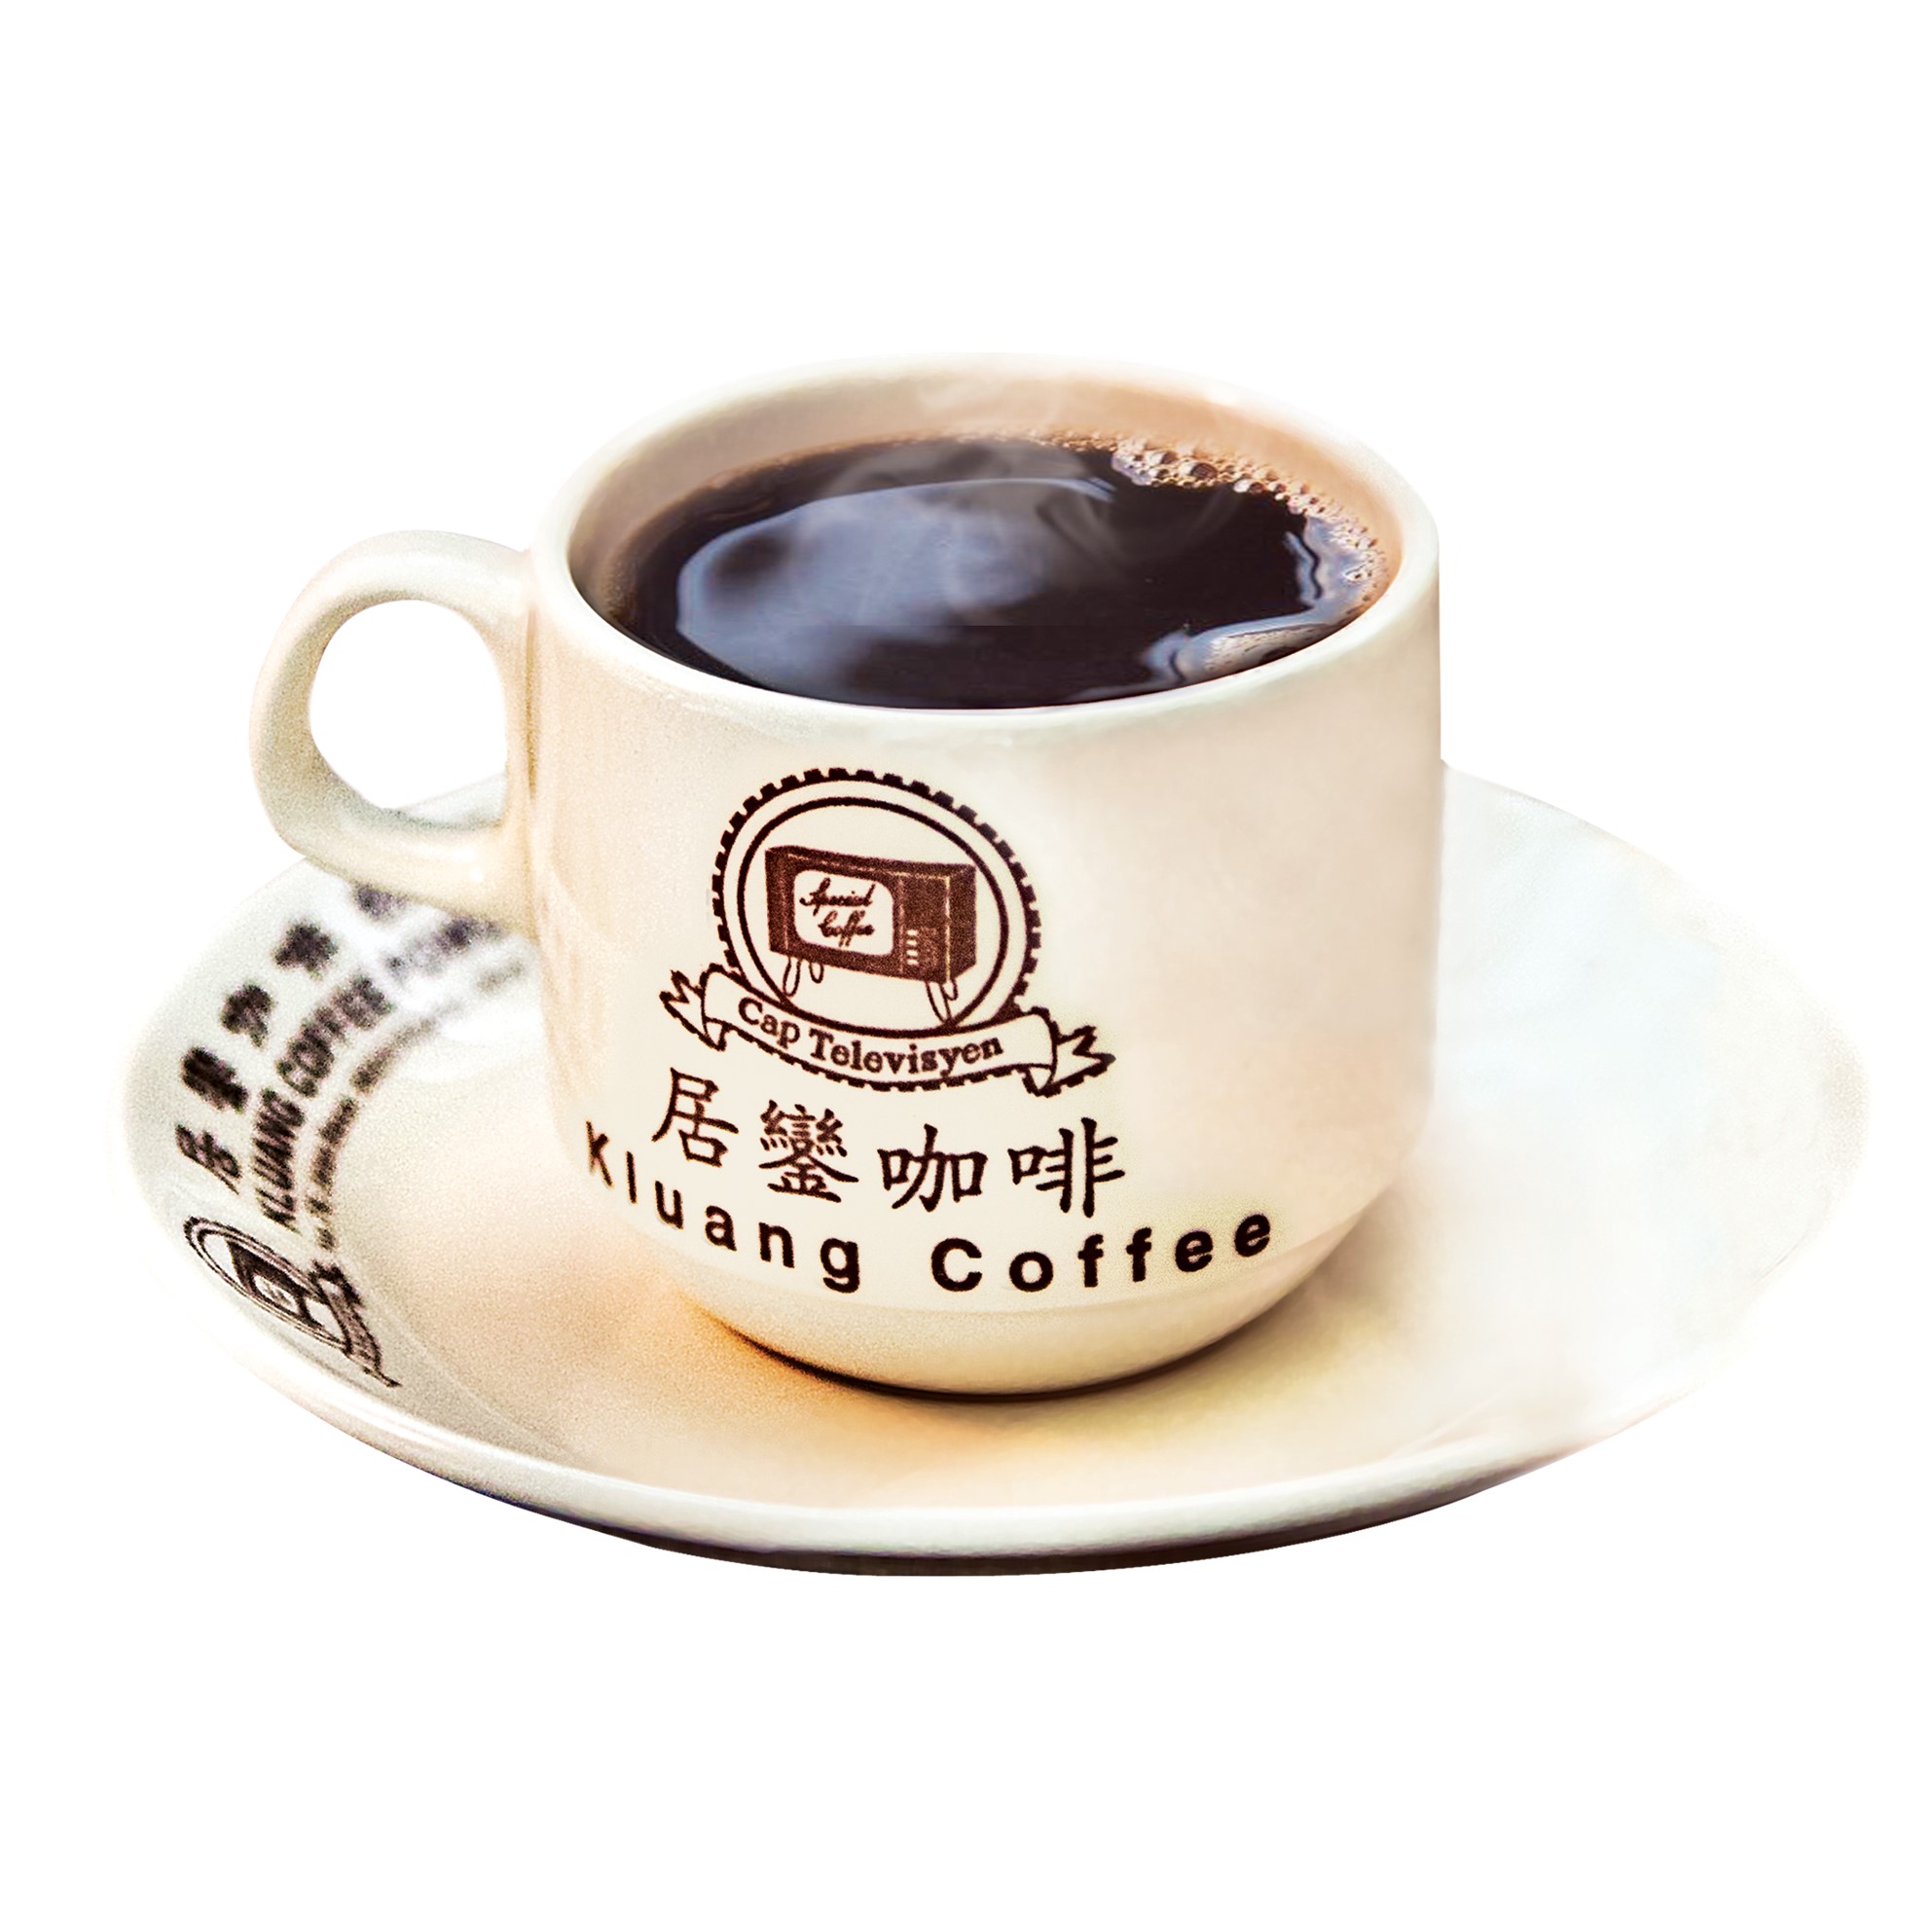 KLUANG COFFEE POWDER FACTORY SDN. BHD.